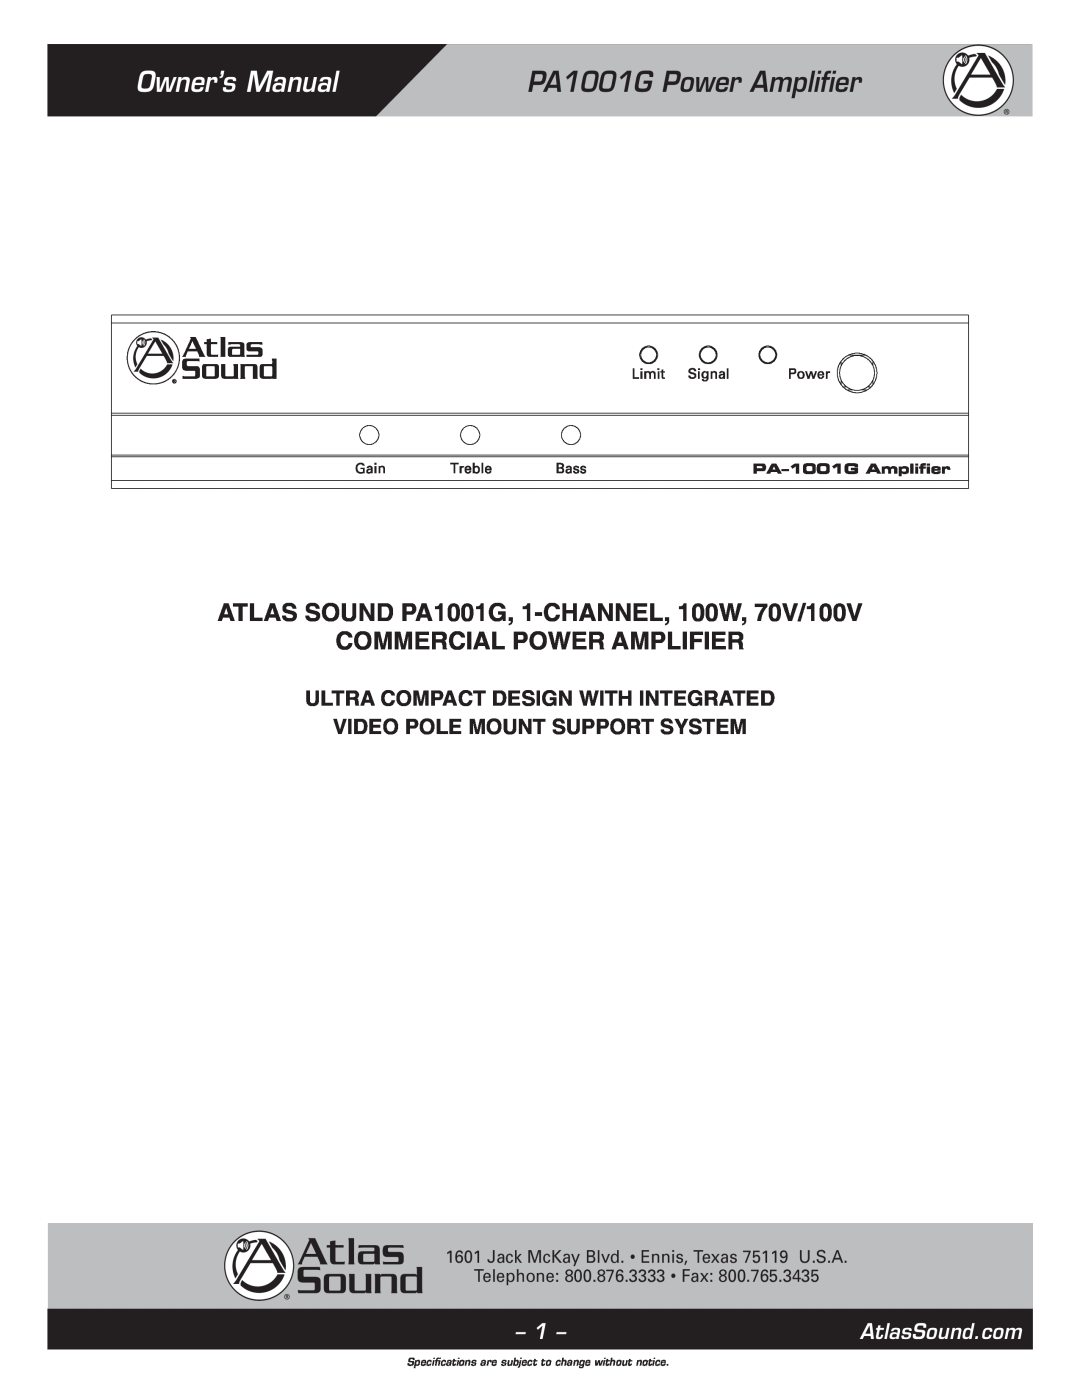 Atlas Sound specifications PA1001G Power Amplifier, Jack McKay Blvd. Ennis, Texas 75119 U.S.A 